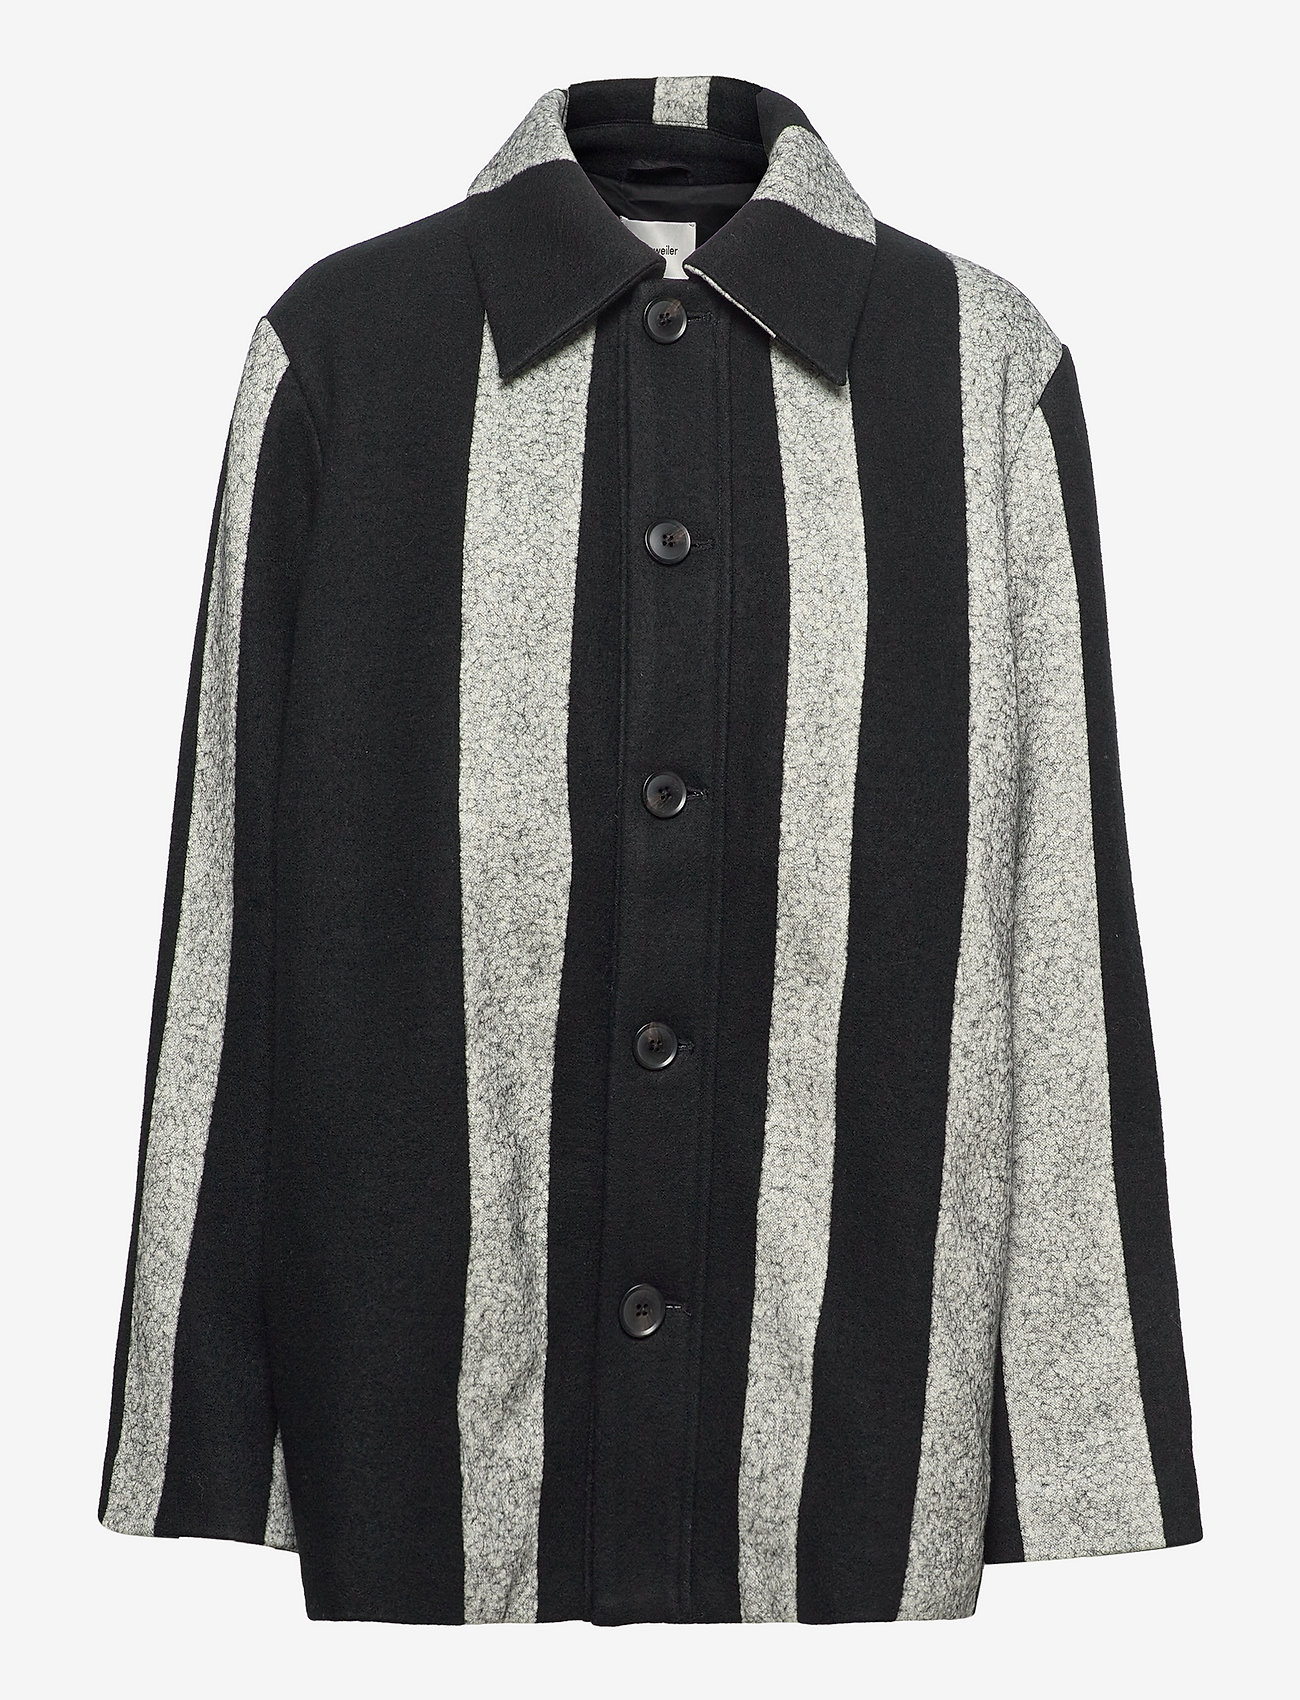 HOLZWEILER - Emotional Jacket - winter jackets - black stripe - 0